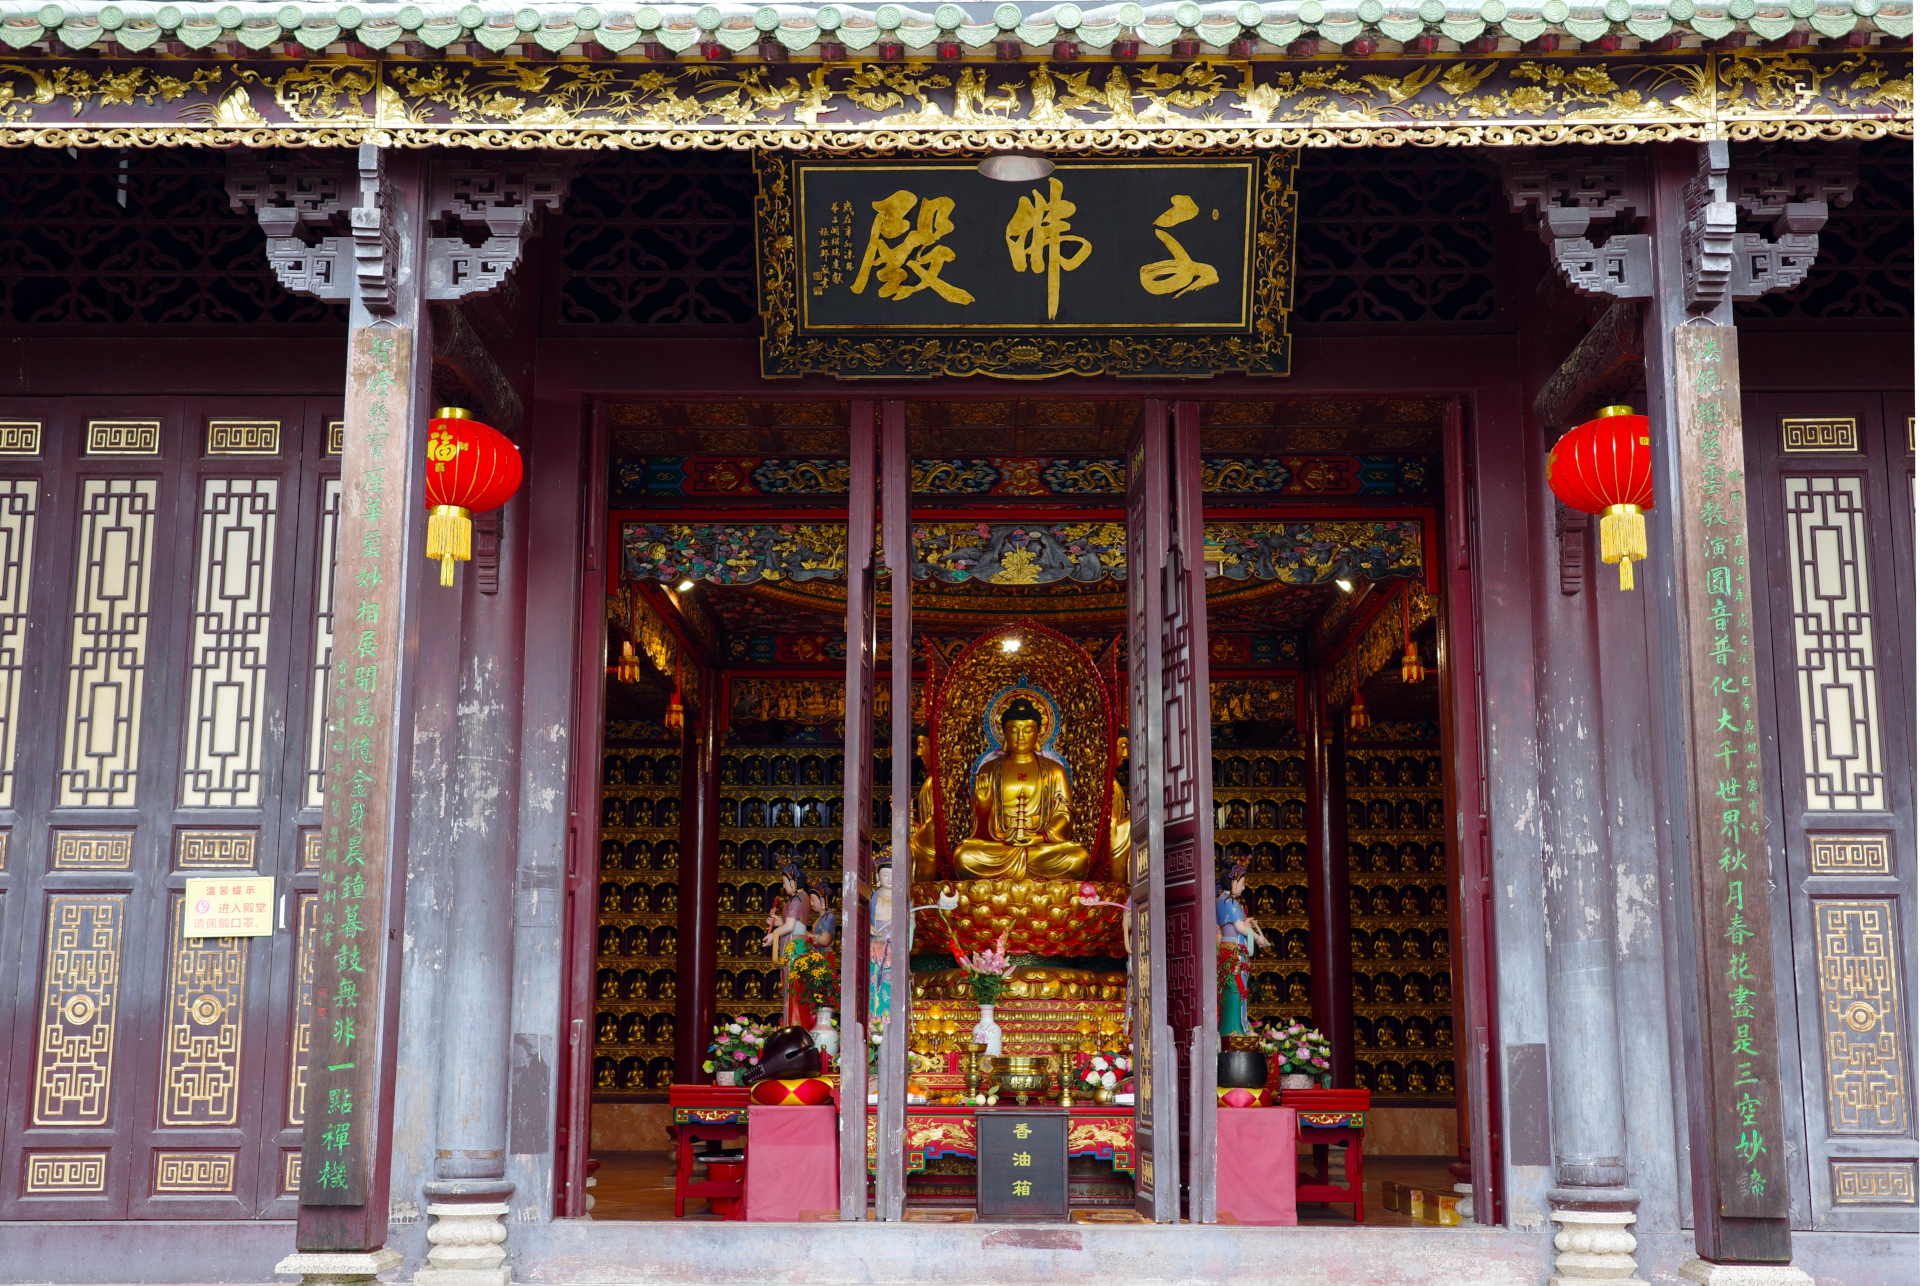 A shrine to Buddha